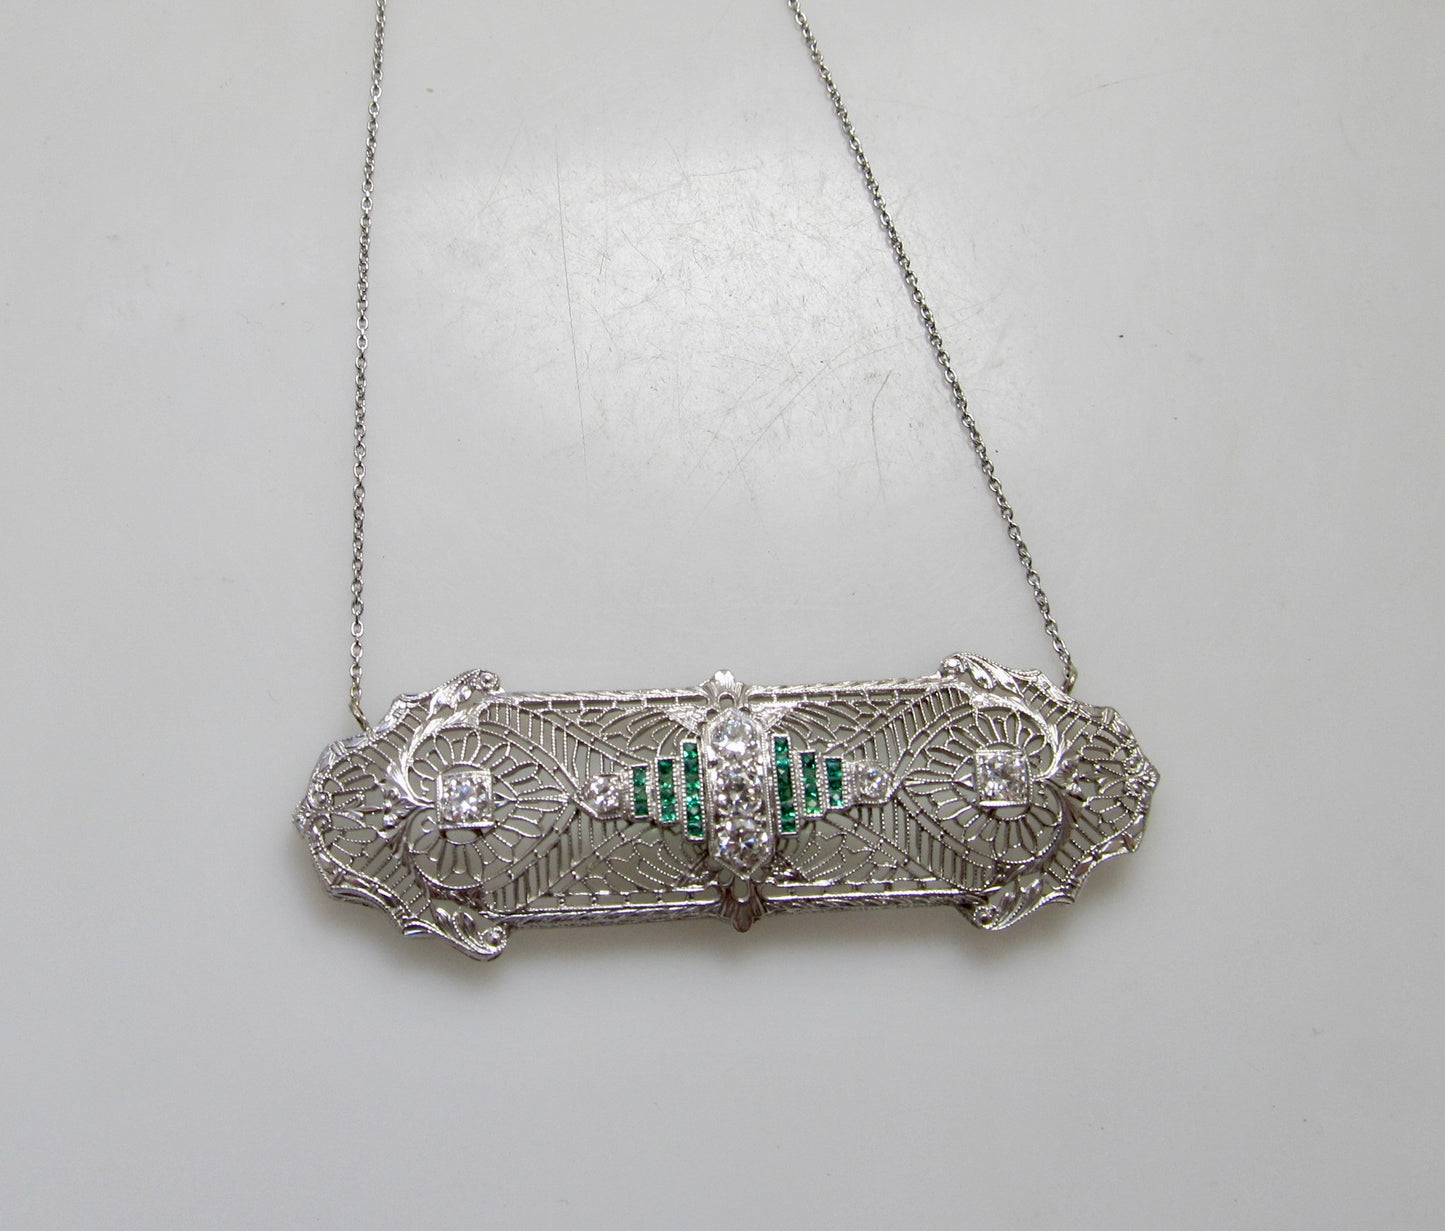 Antique emerald and diamond necklace